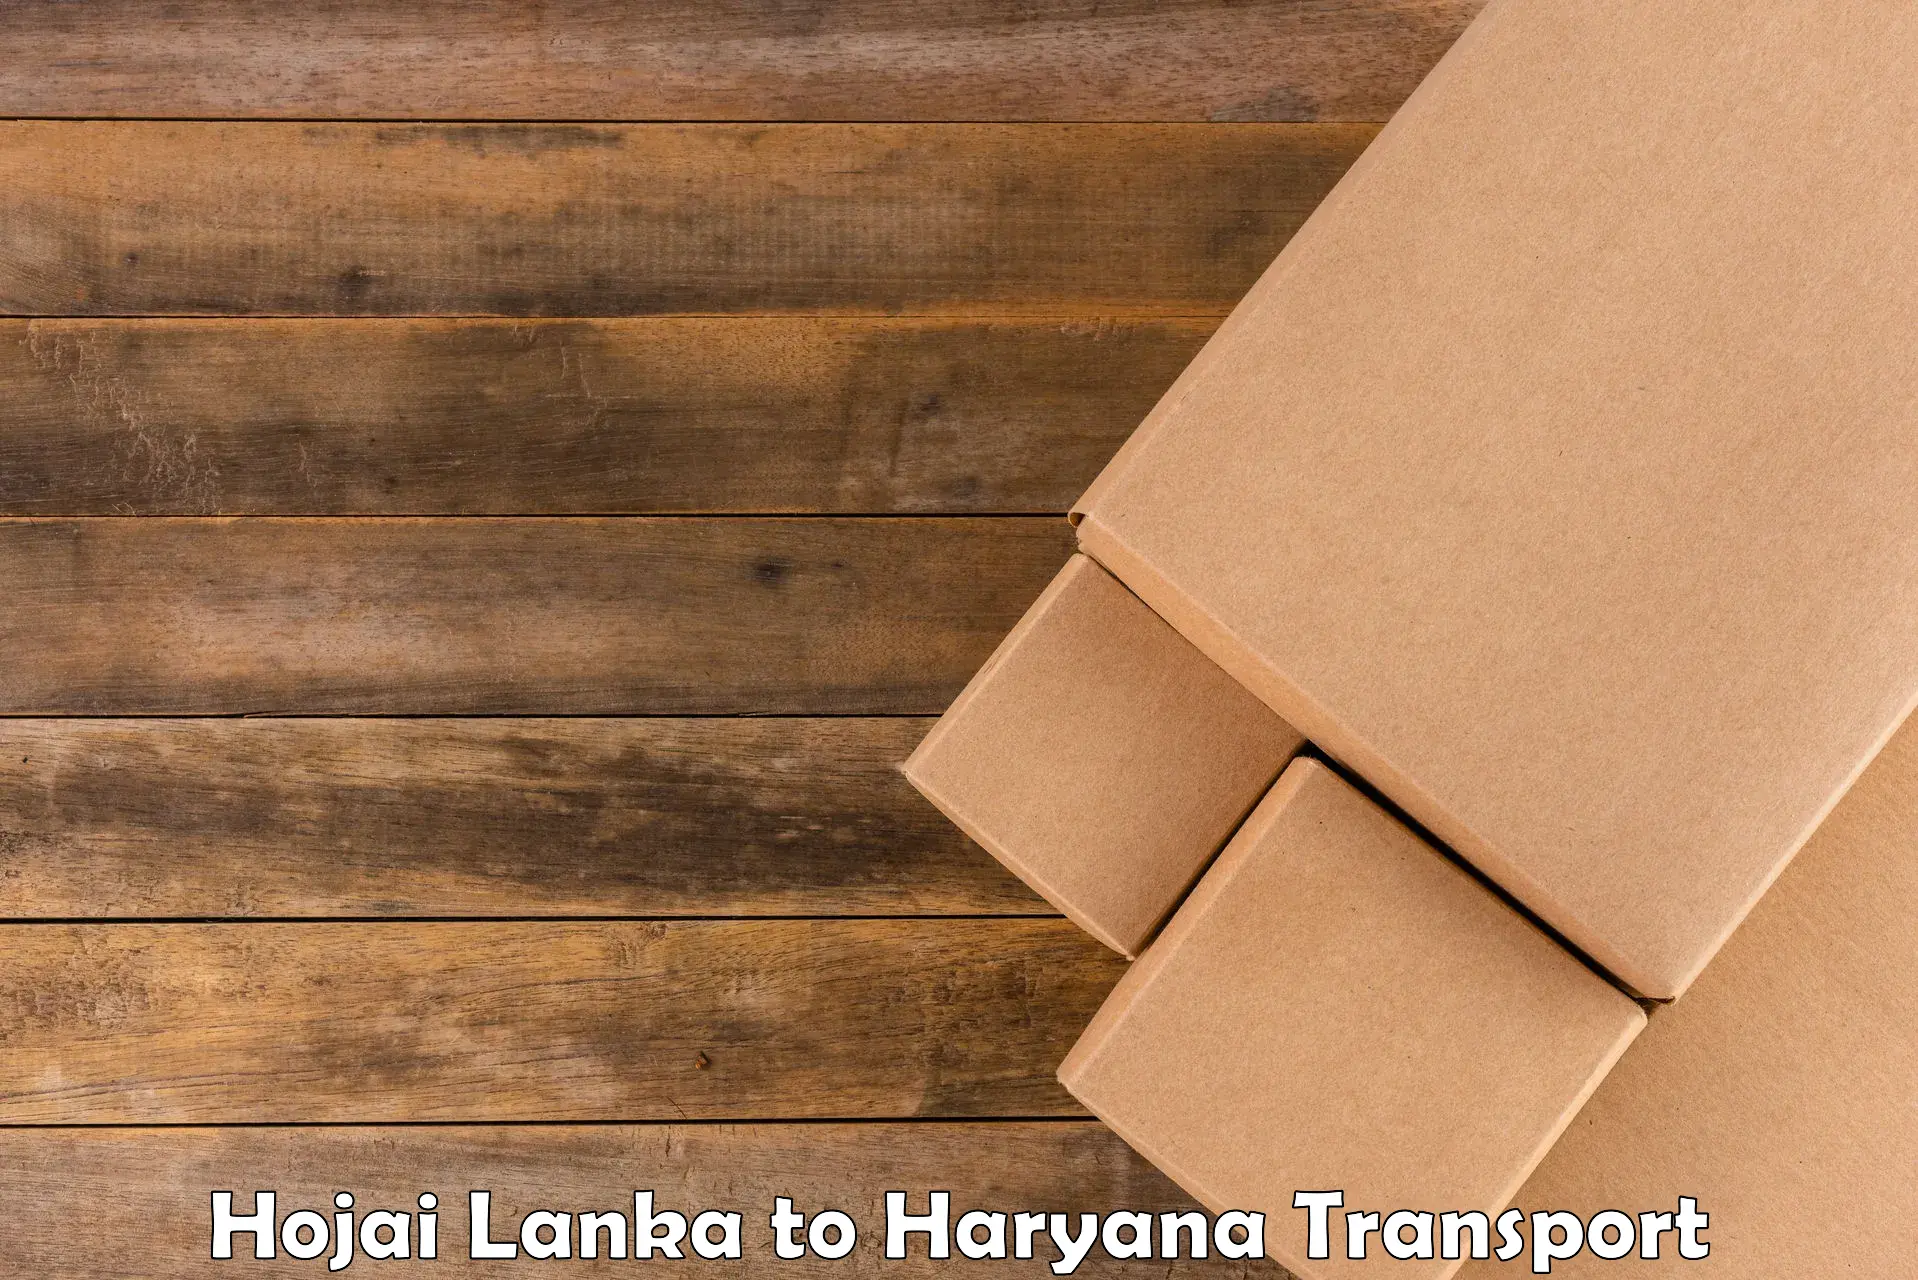 Cargo transport services Hojai Lanka to Siwani